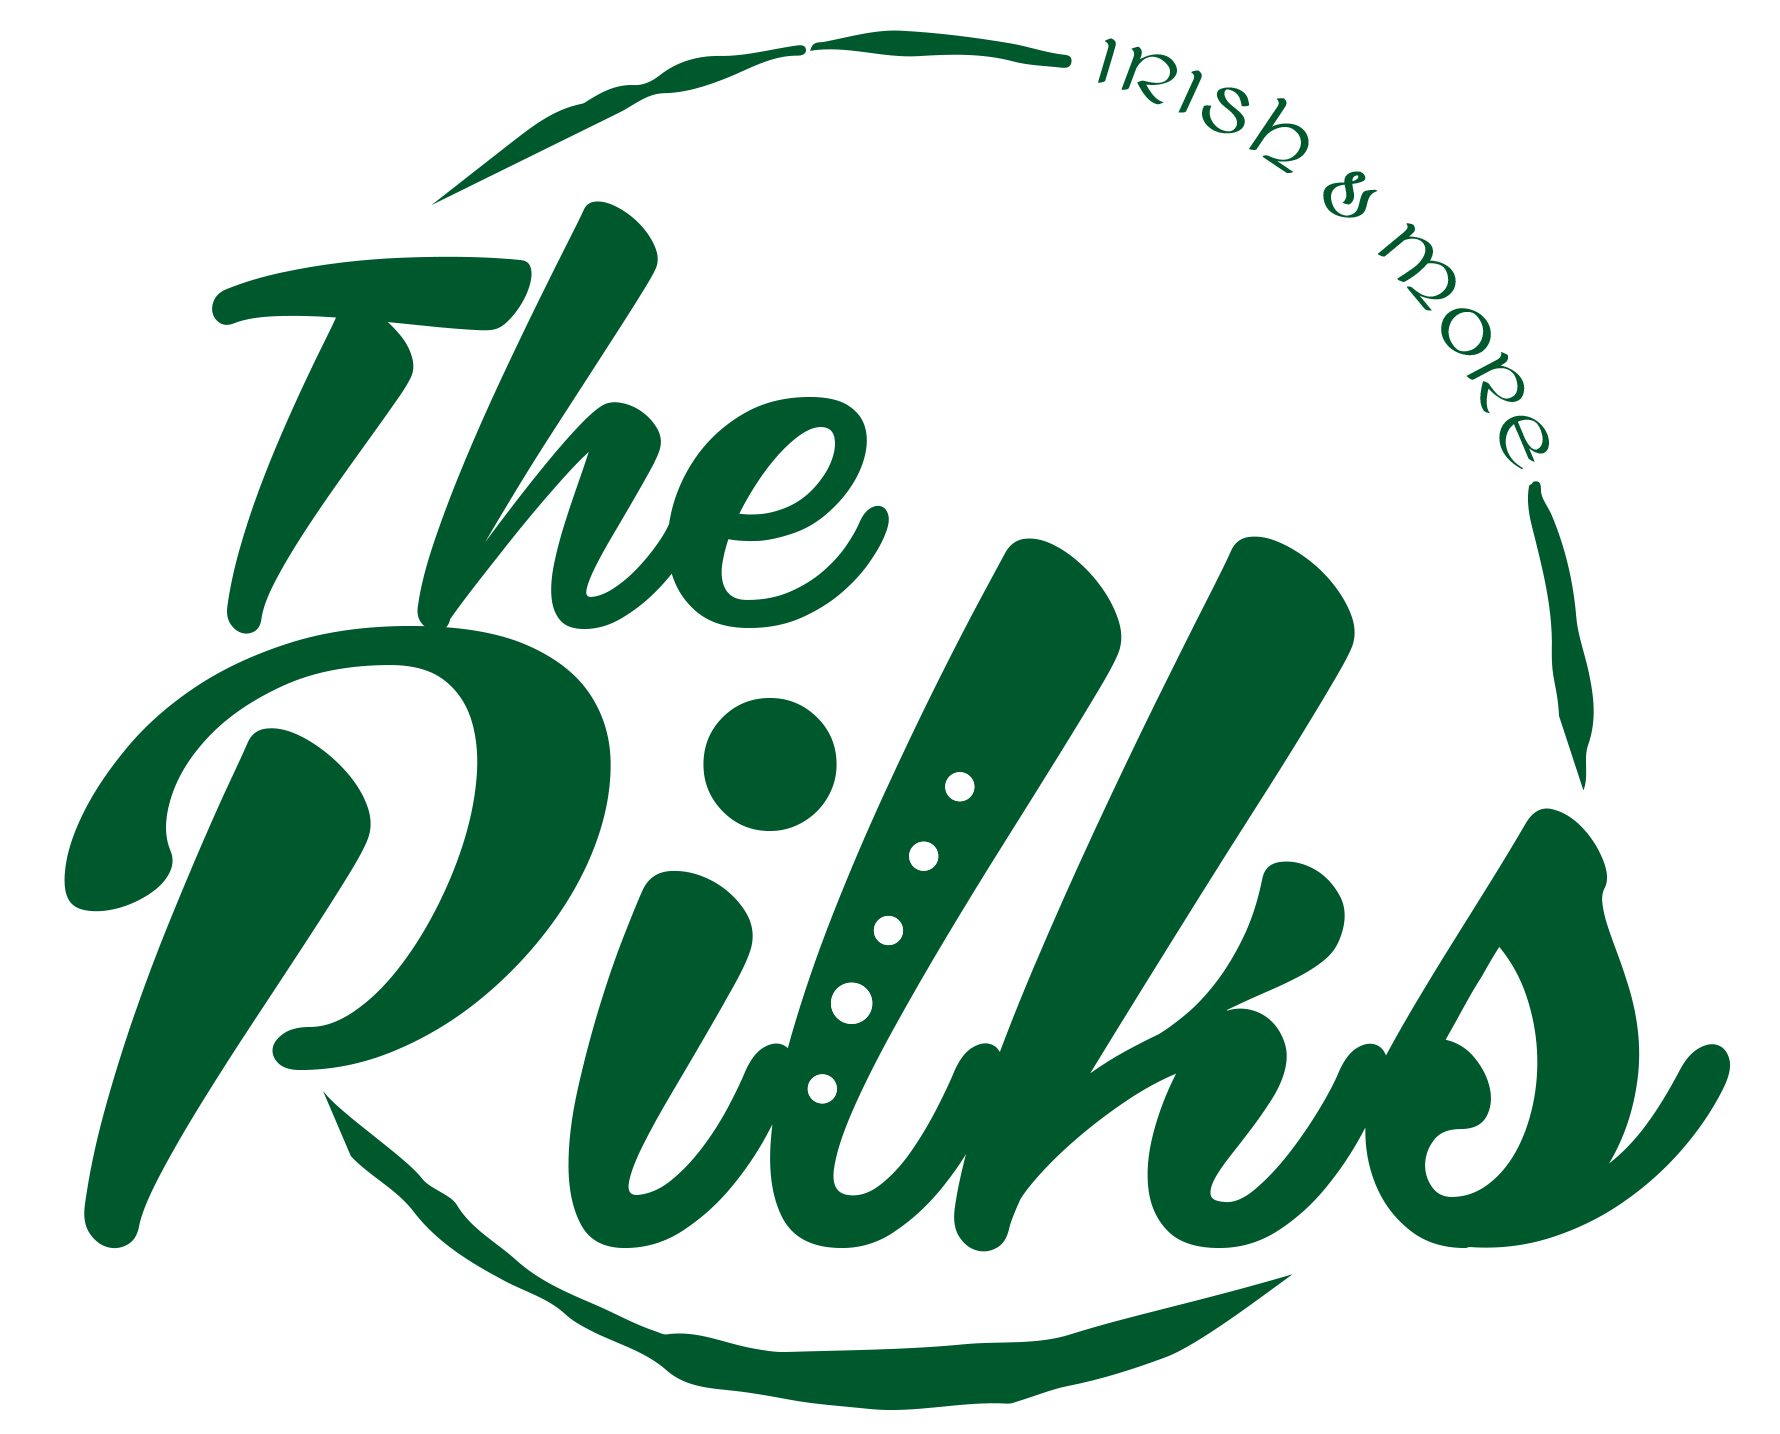 The Pilks